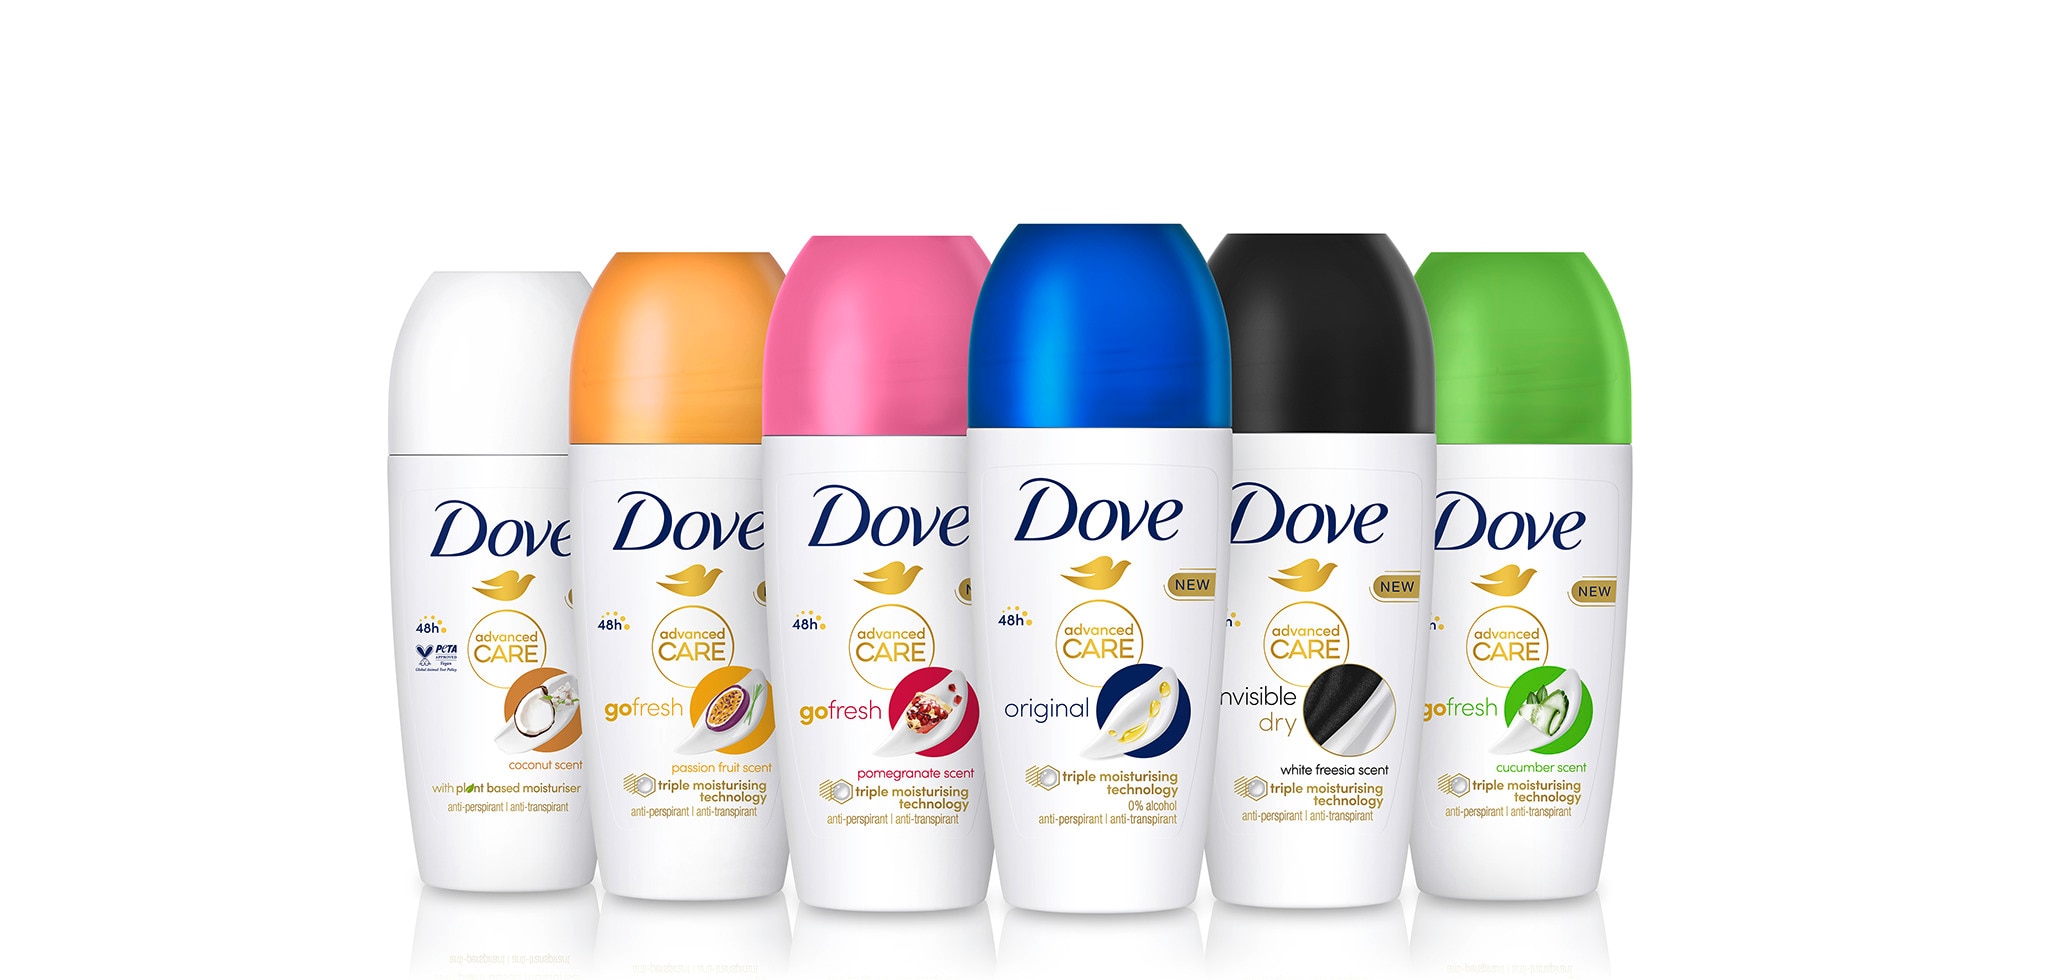 Dove Roll-on antiperspirants and deodorants